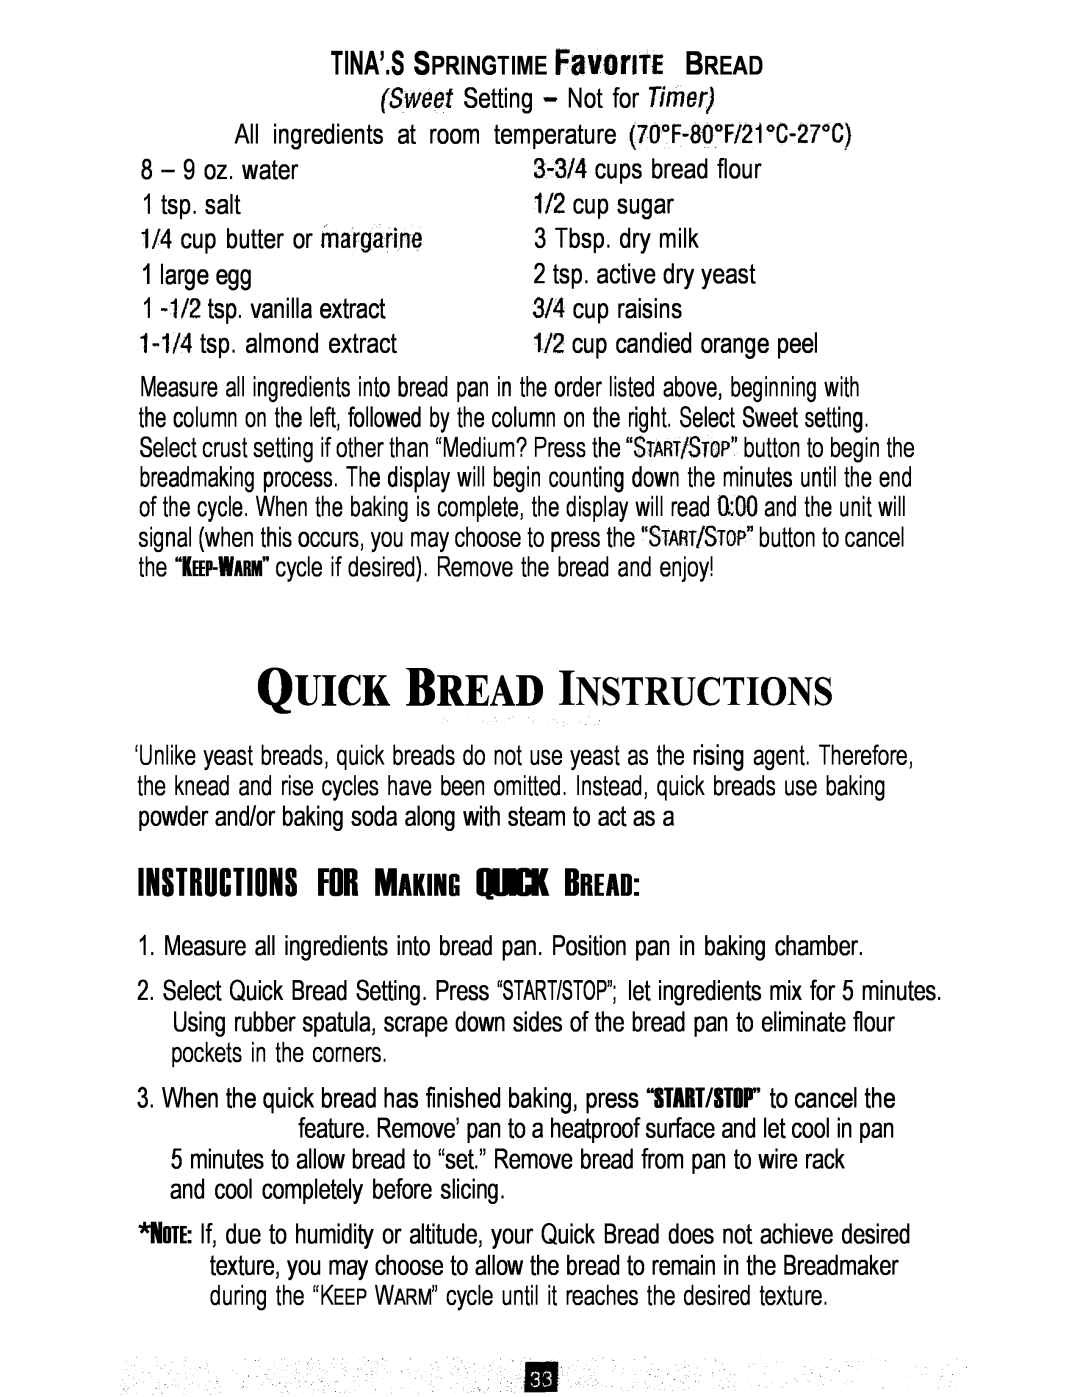 Sunbeam Bread/Dough Maker Quick Bread Instructions, Instructions For Making Quick Bread, 9 oz. water, cups bread flour 